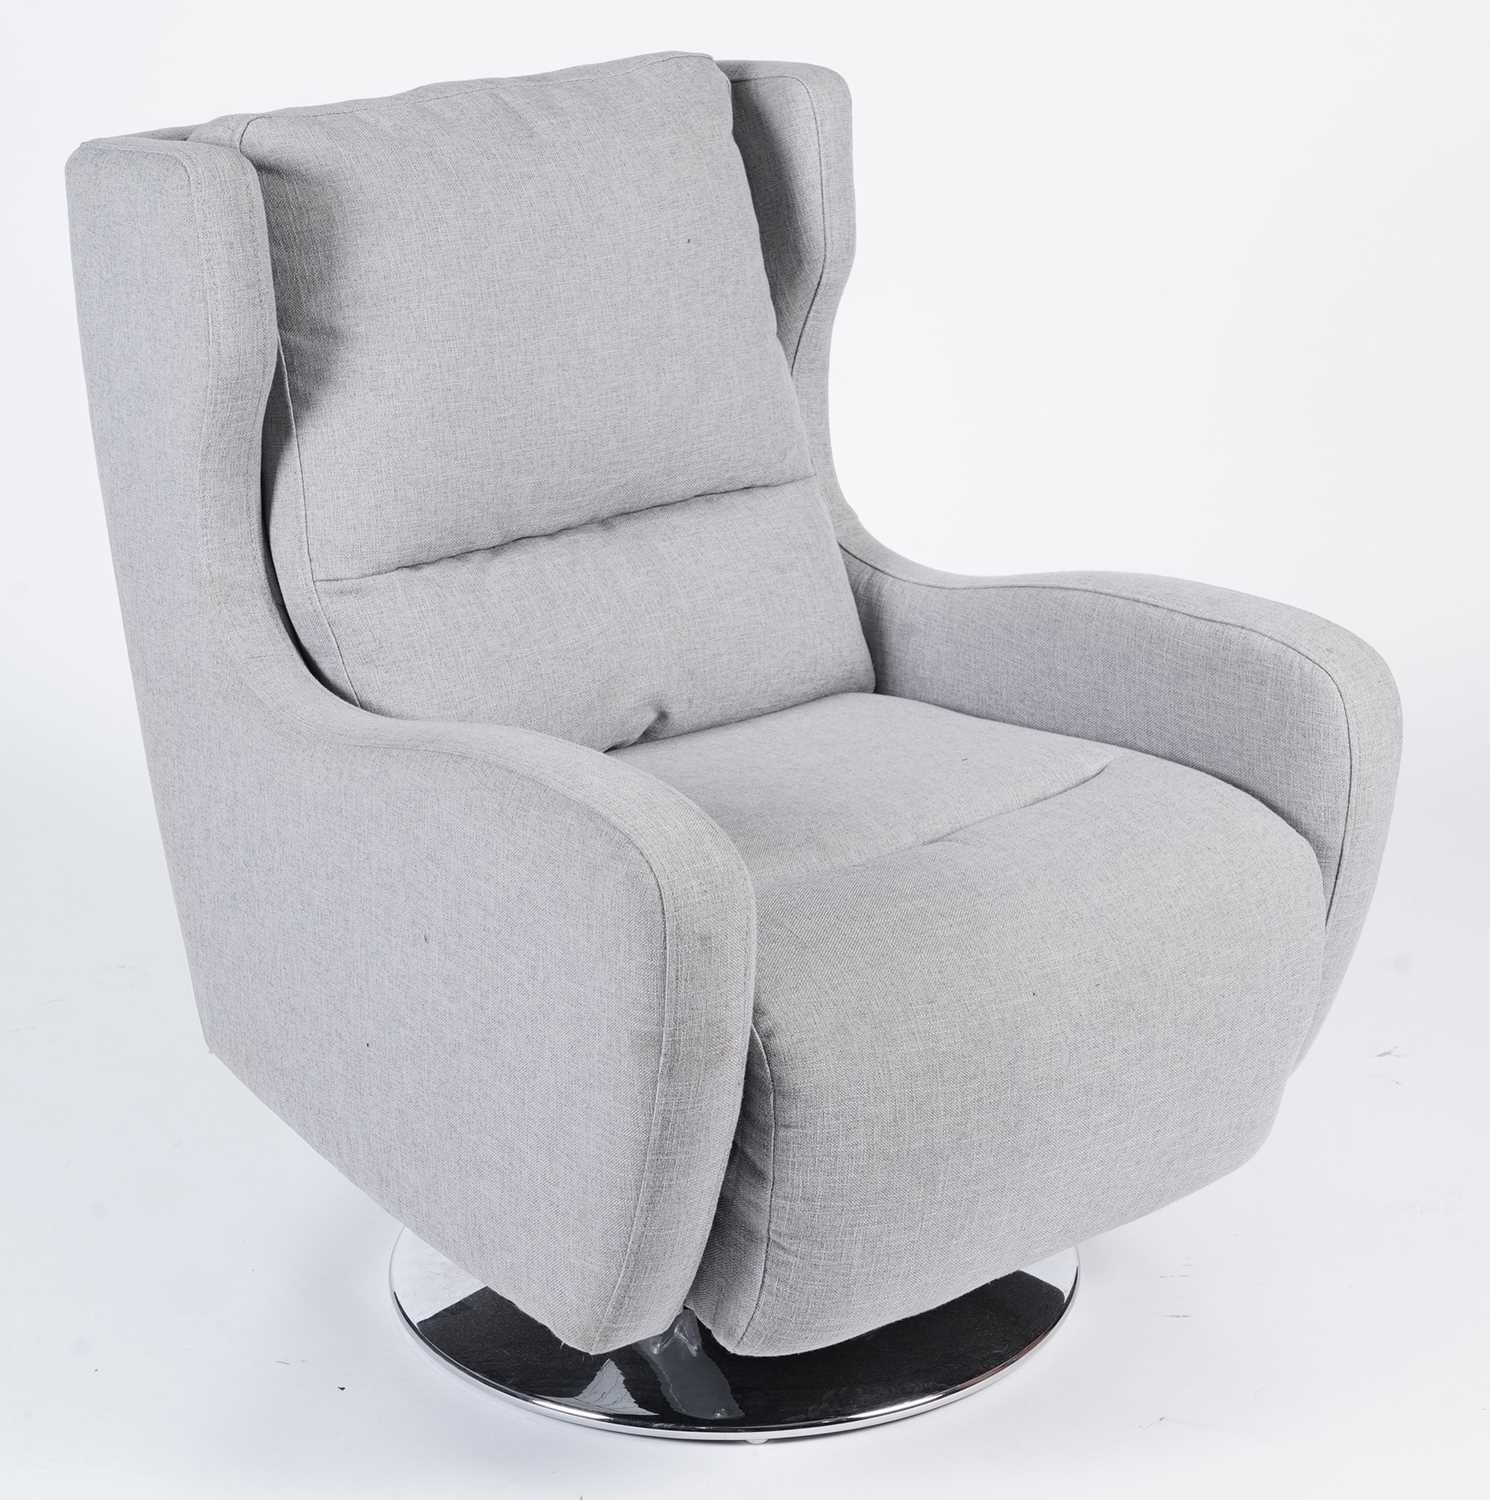 A modern grey/light blue upholstered swivel armchair - Image 2 of 8